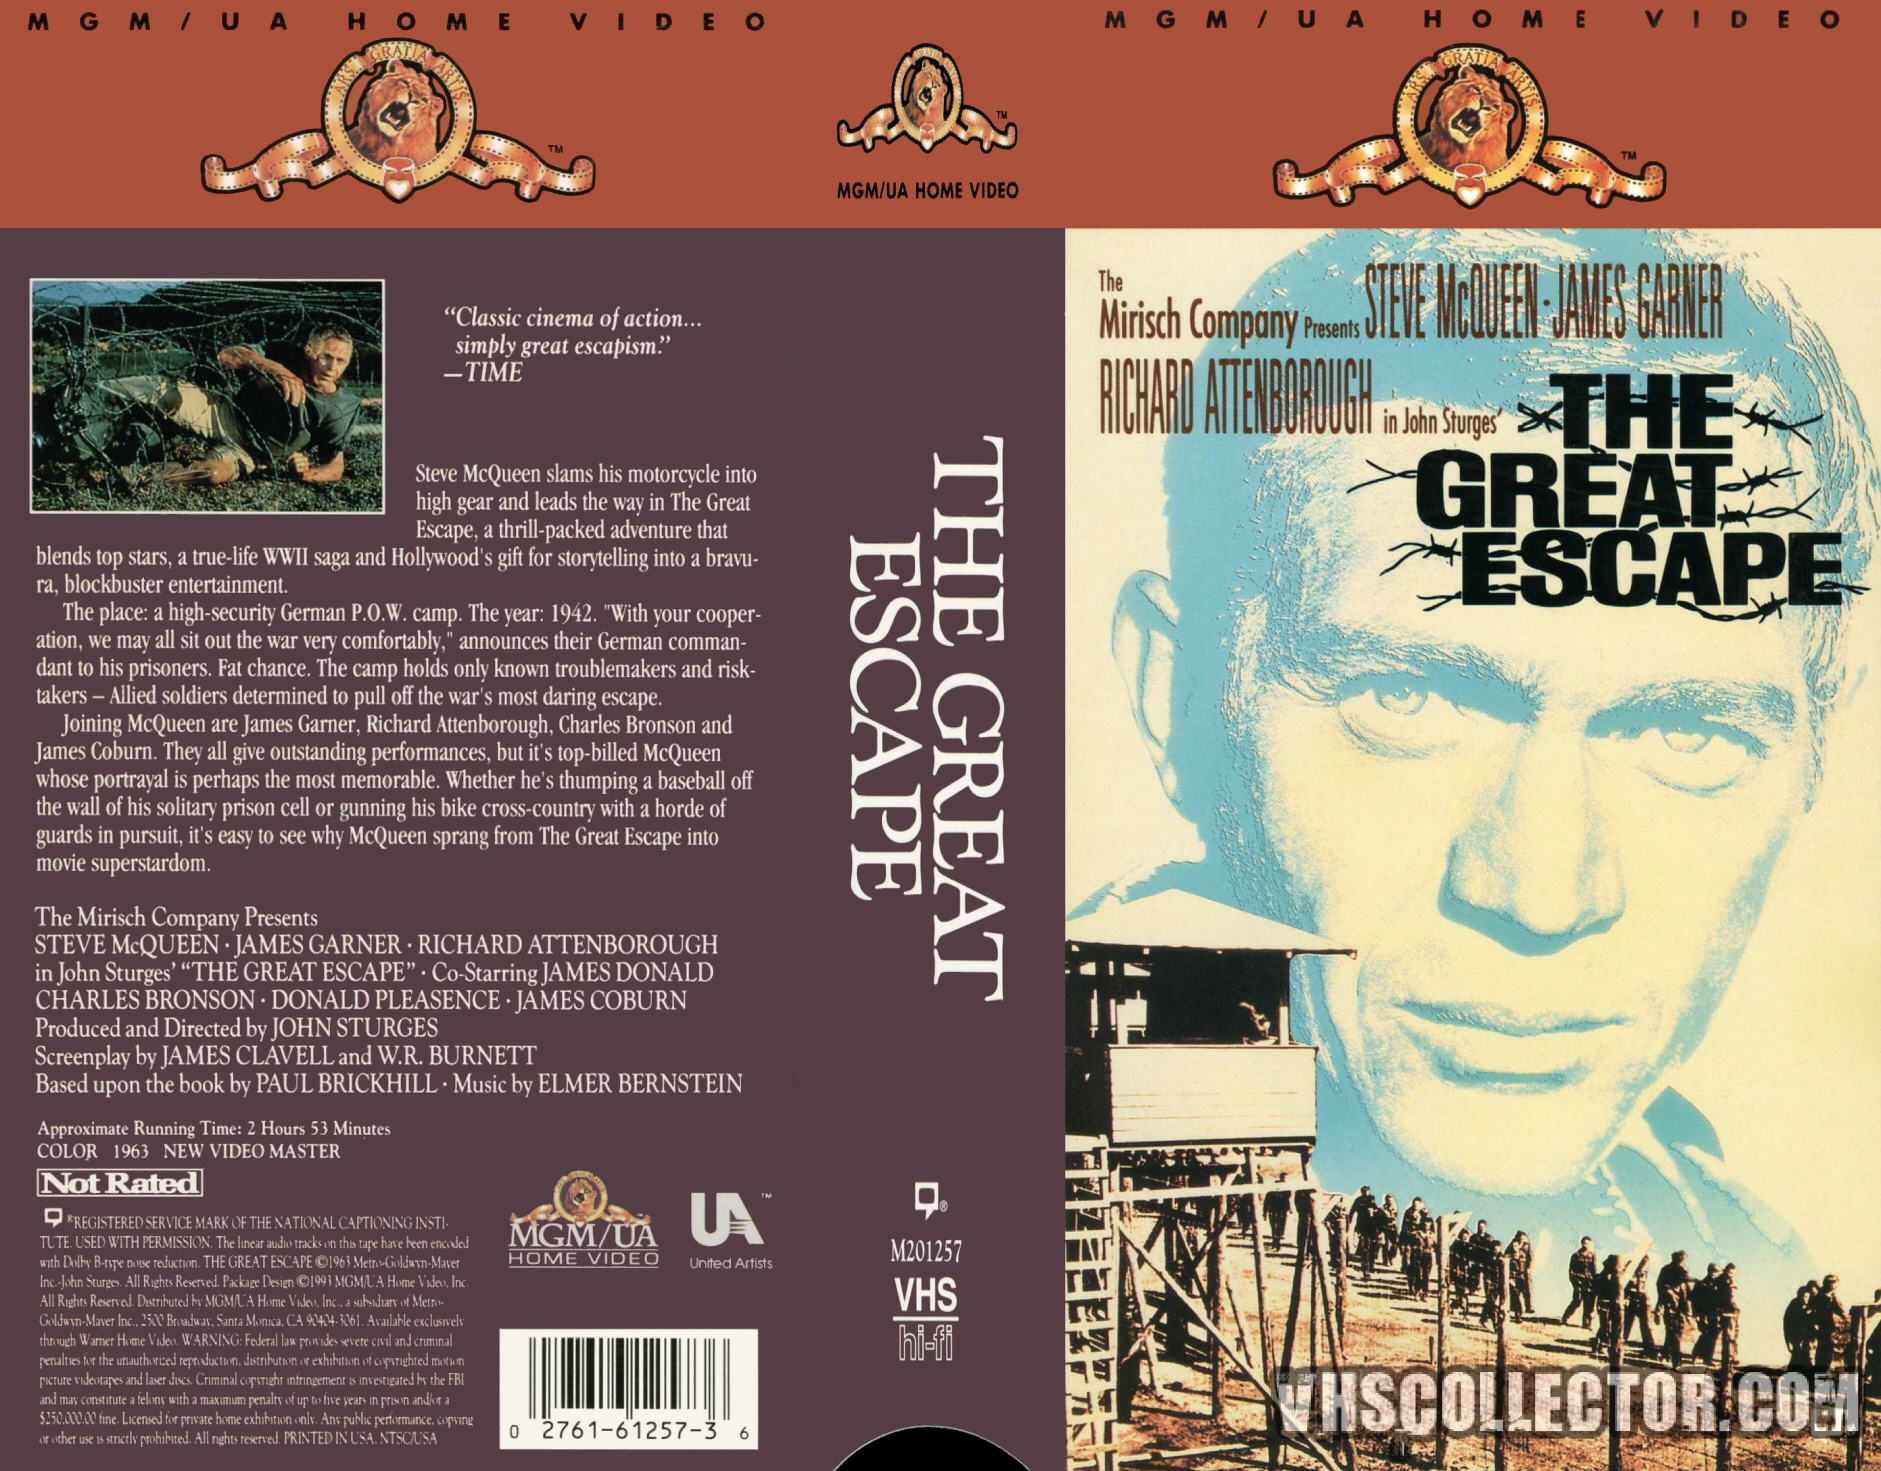 The Great Escape | VHSCollector.com